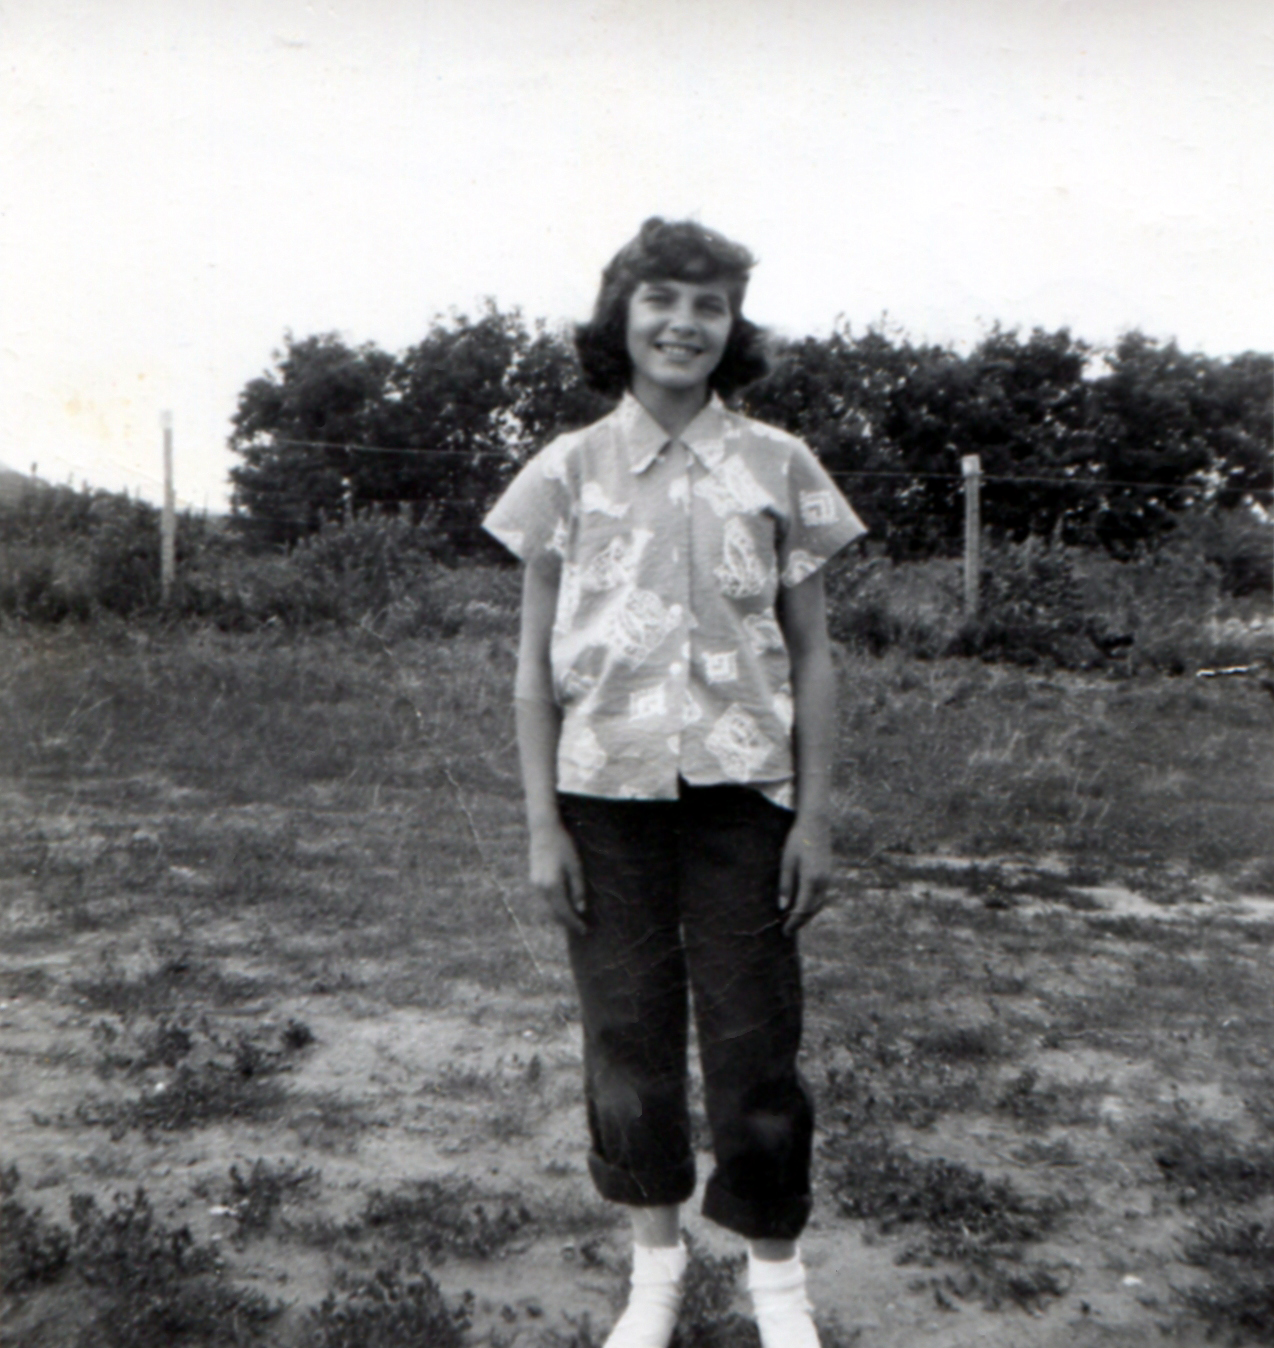 Darlene about 1955